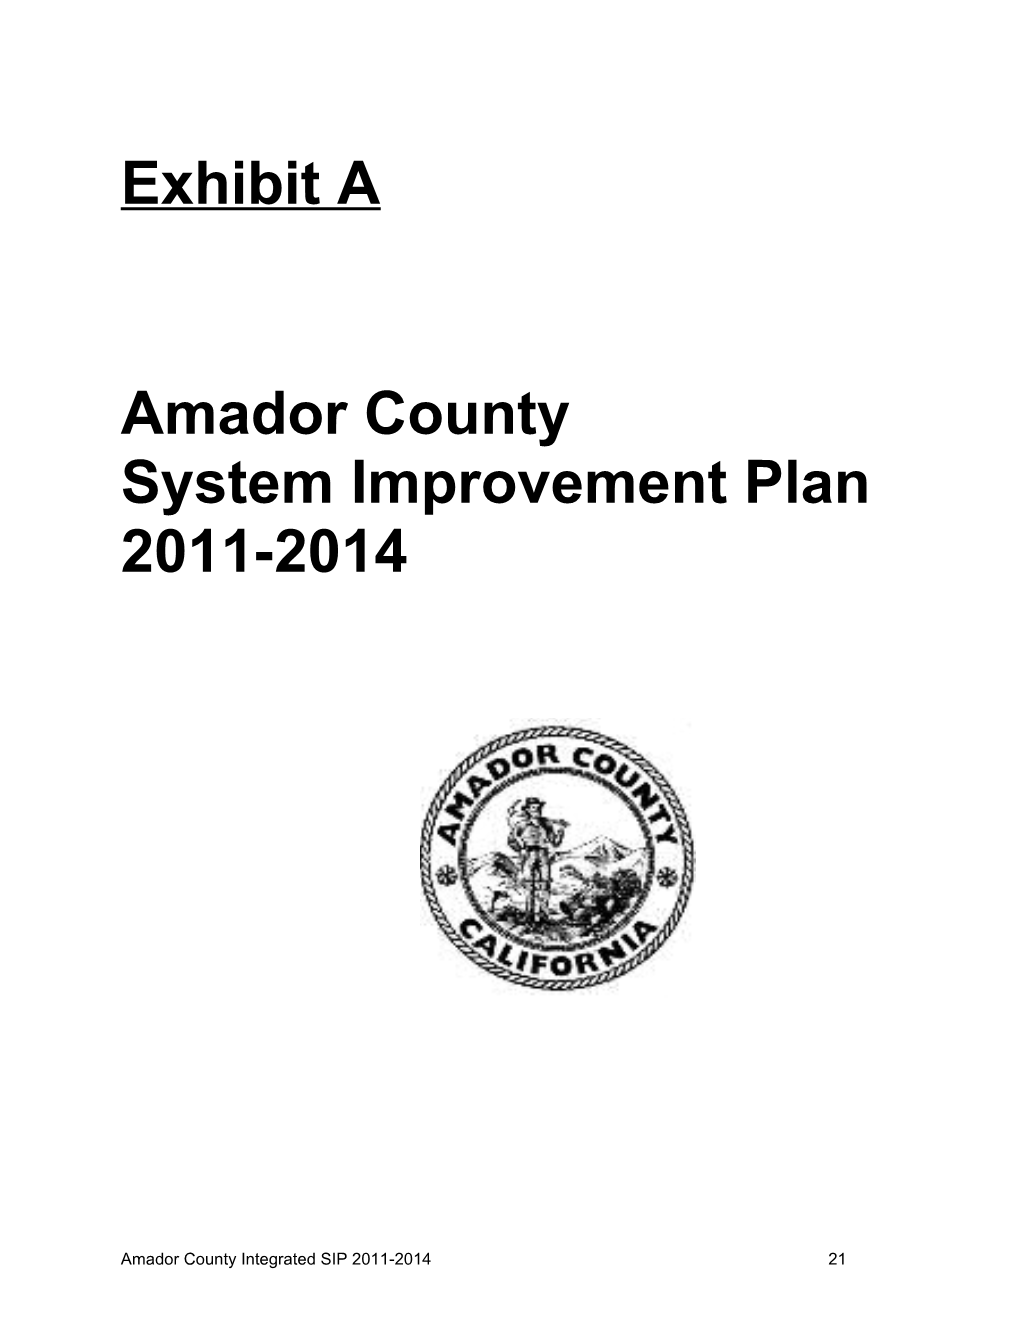 Trinity County System Improvement Plan (SIP)